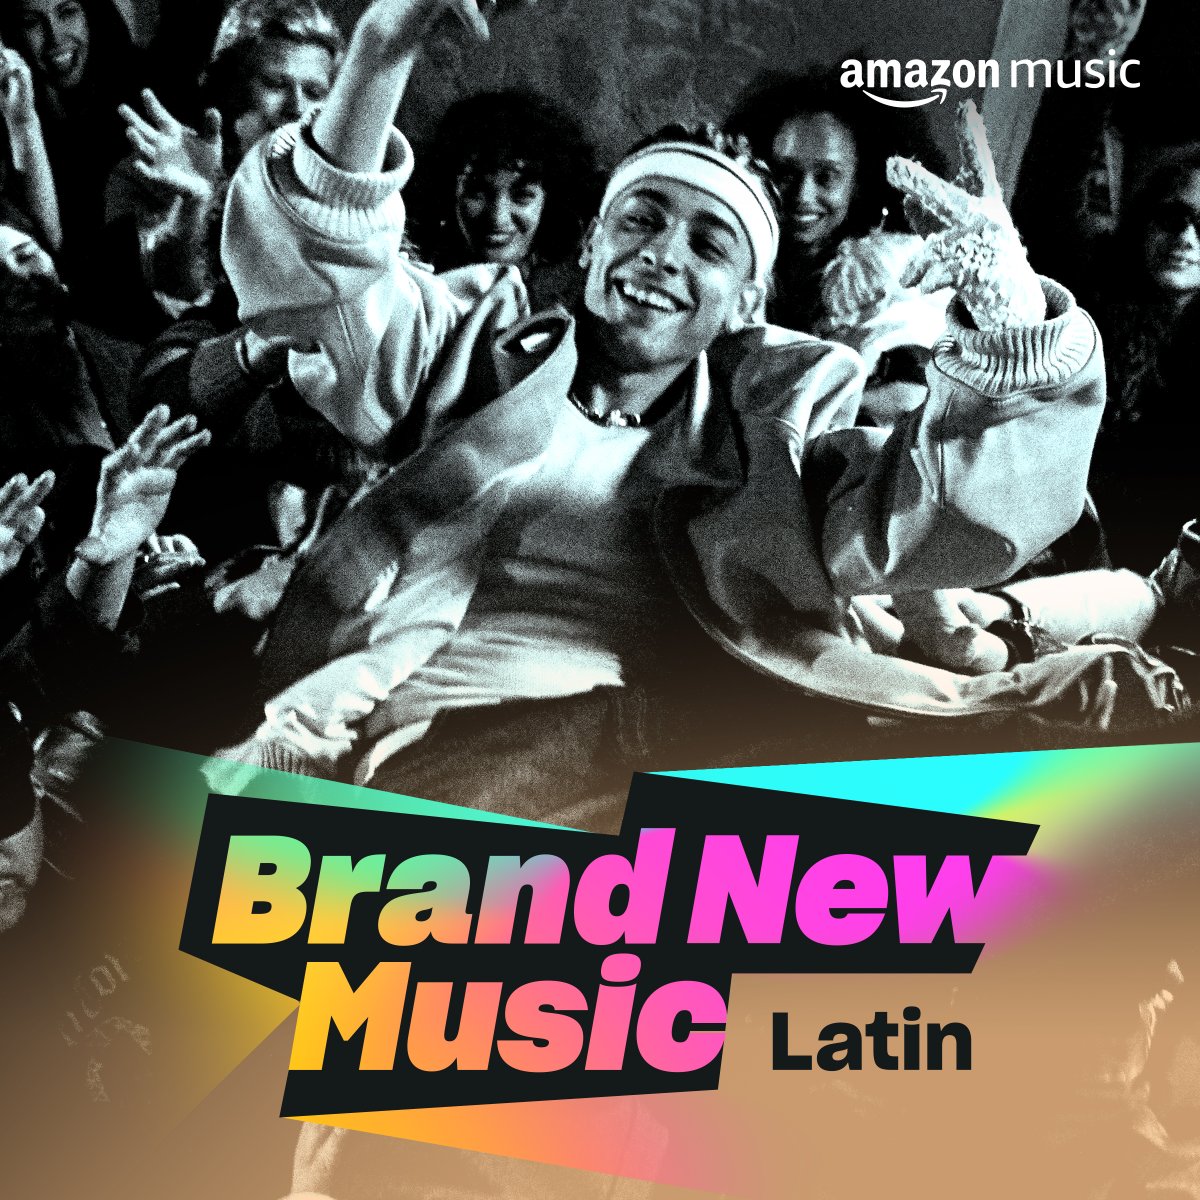 👇⛈️Todo lo nuevo en #BrandNewMusicLatin de @AmazonMusicMX. Escucha 'Tranky Funky' de @TruenoOficiaI en esta playlist. ⛈️👇

🎵: music.amazon.com.mx/playlists/B089…